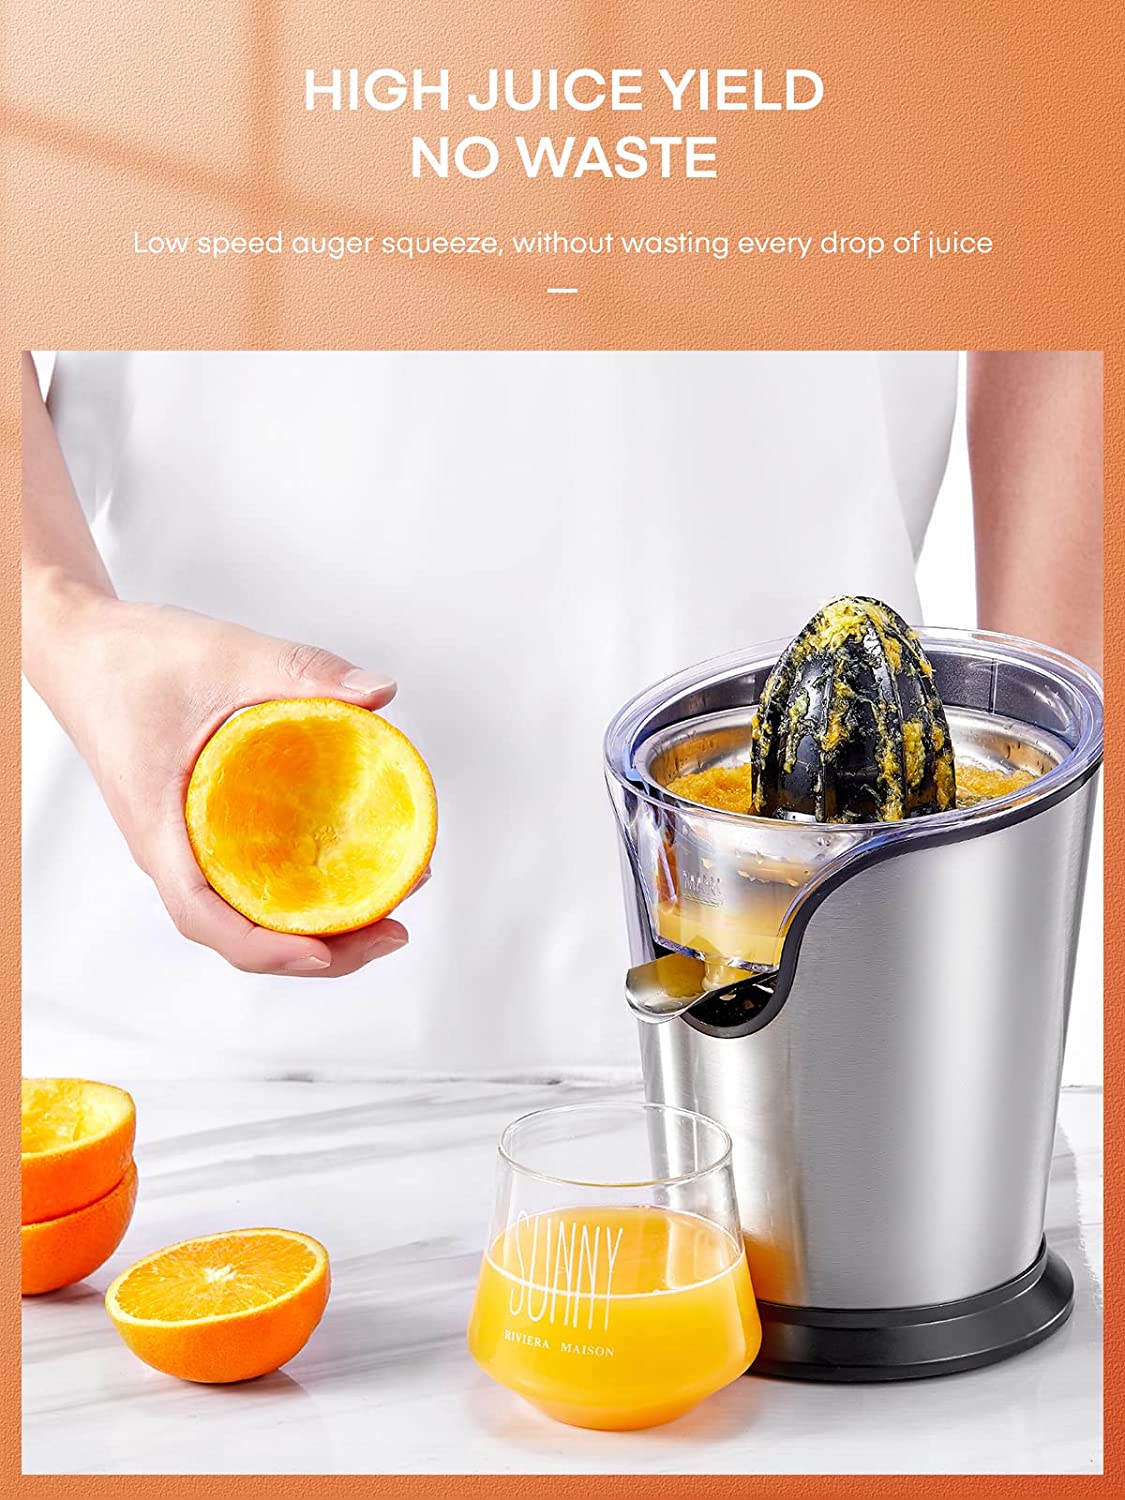 FOHERE Orange Juice Squeezer Electric Citrus Juicer with Two